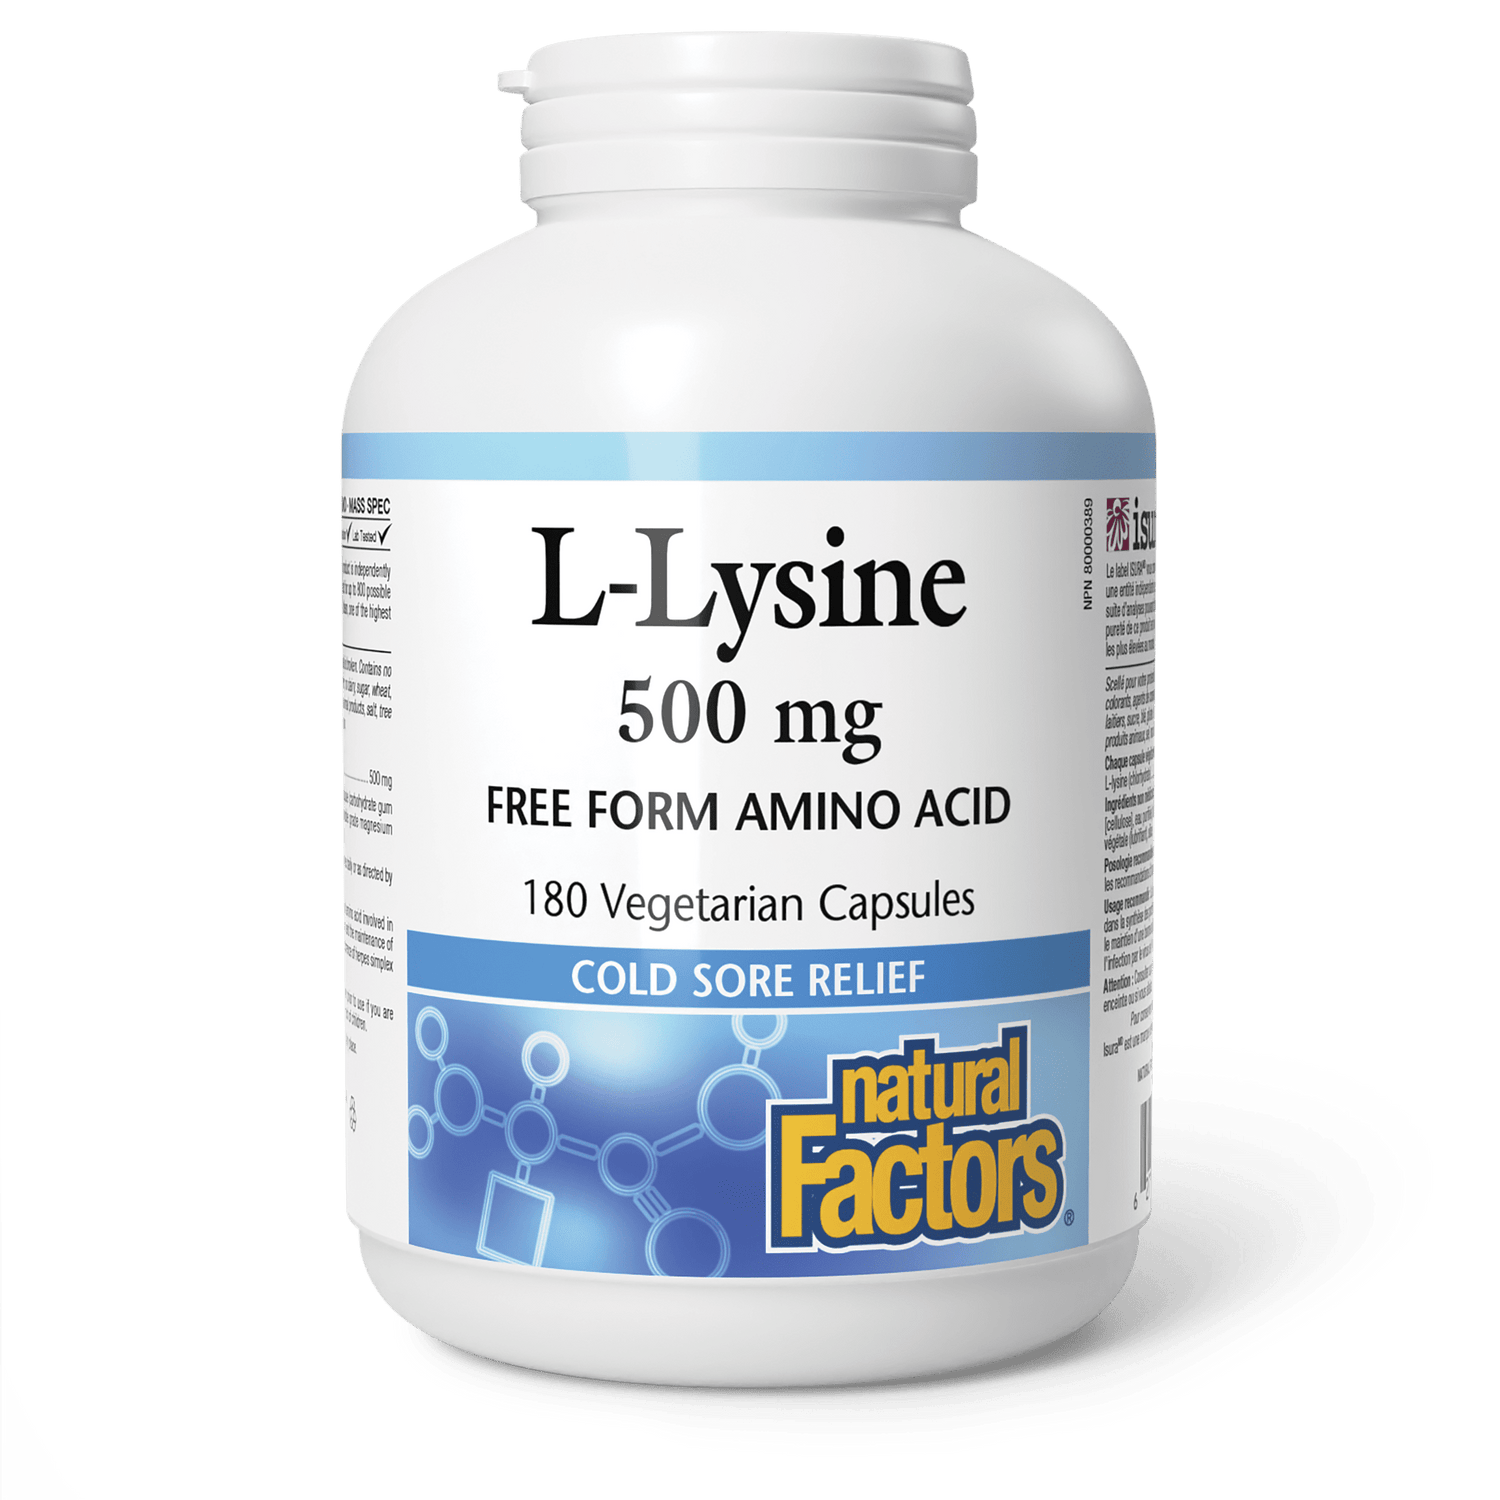 L-Lysine 500 mg, Natural Factors|v|image|2858